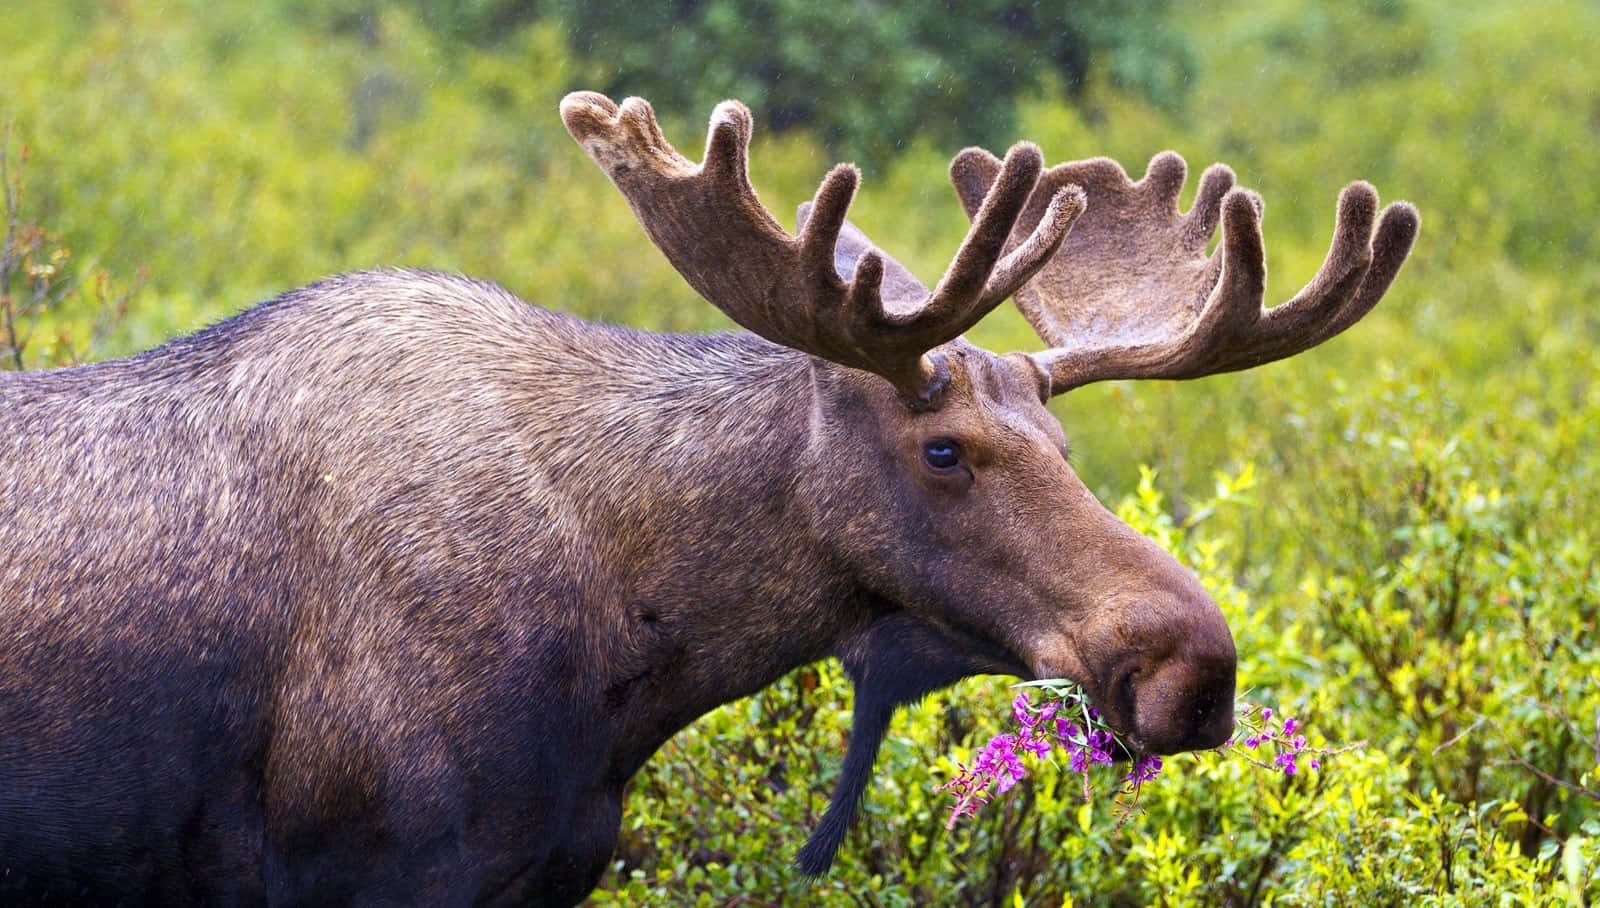 Majestic Moosein Nature.jpg Wallpaper